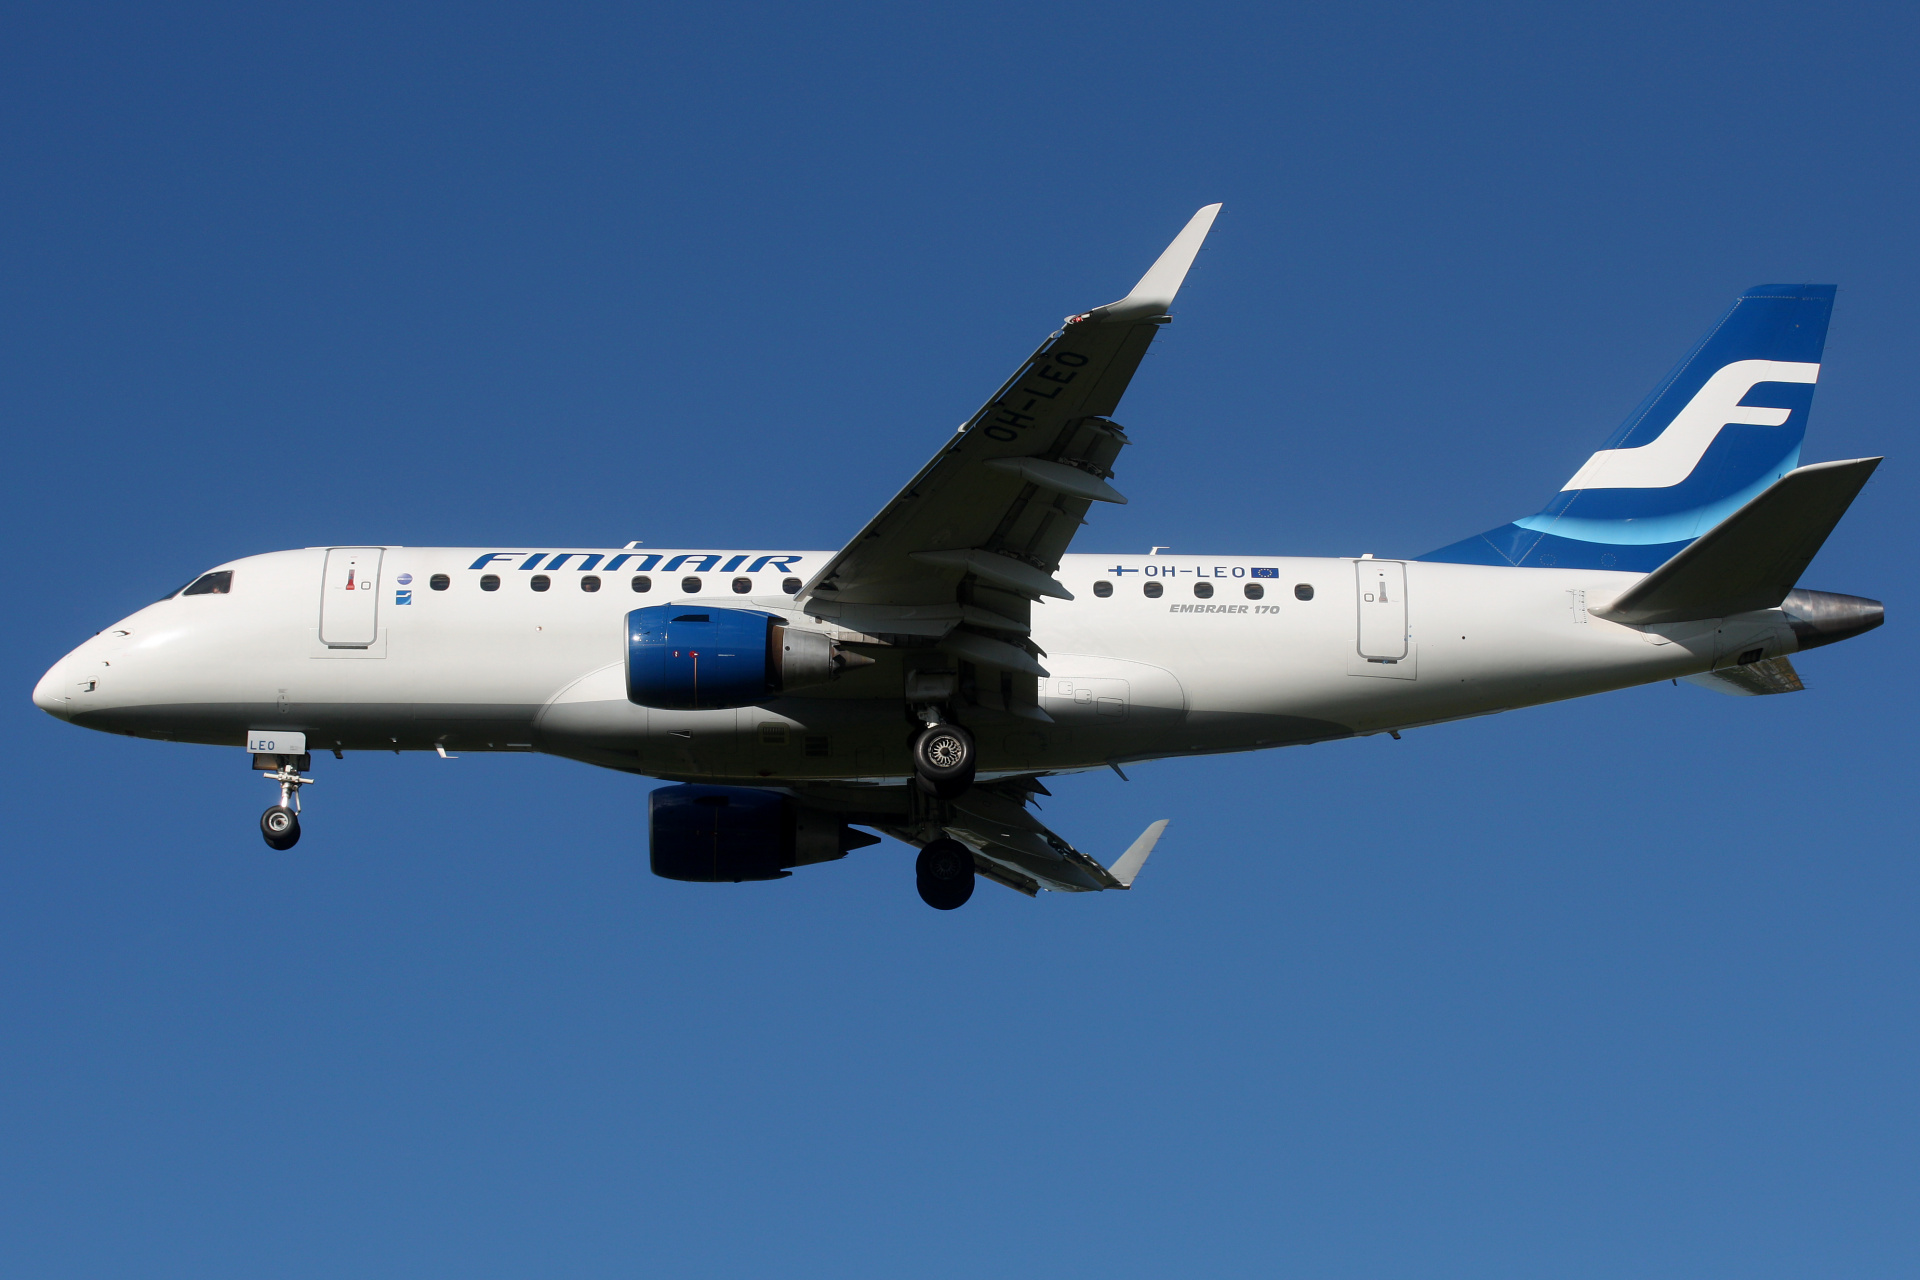 OH-LEO (Aircraft » EPWA Spotting » Embraer E170 » Finnair)